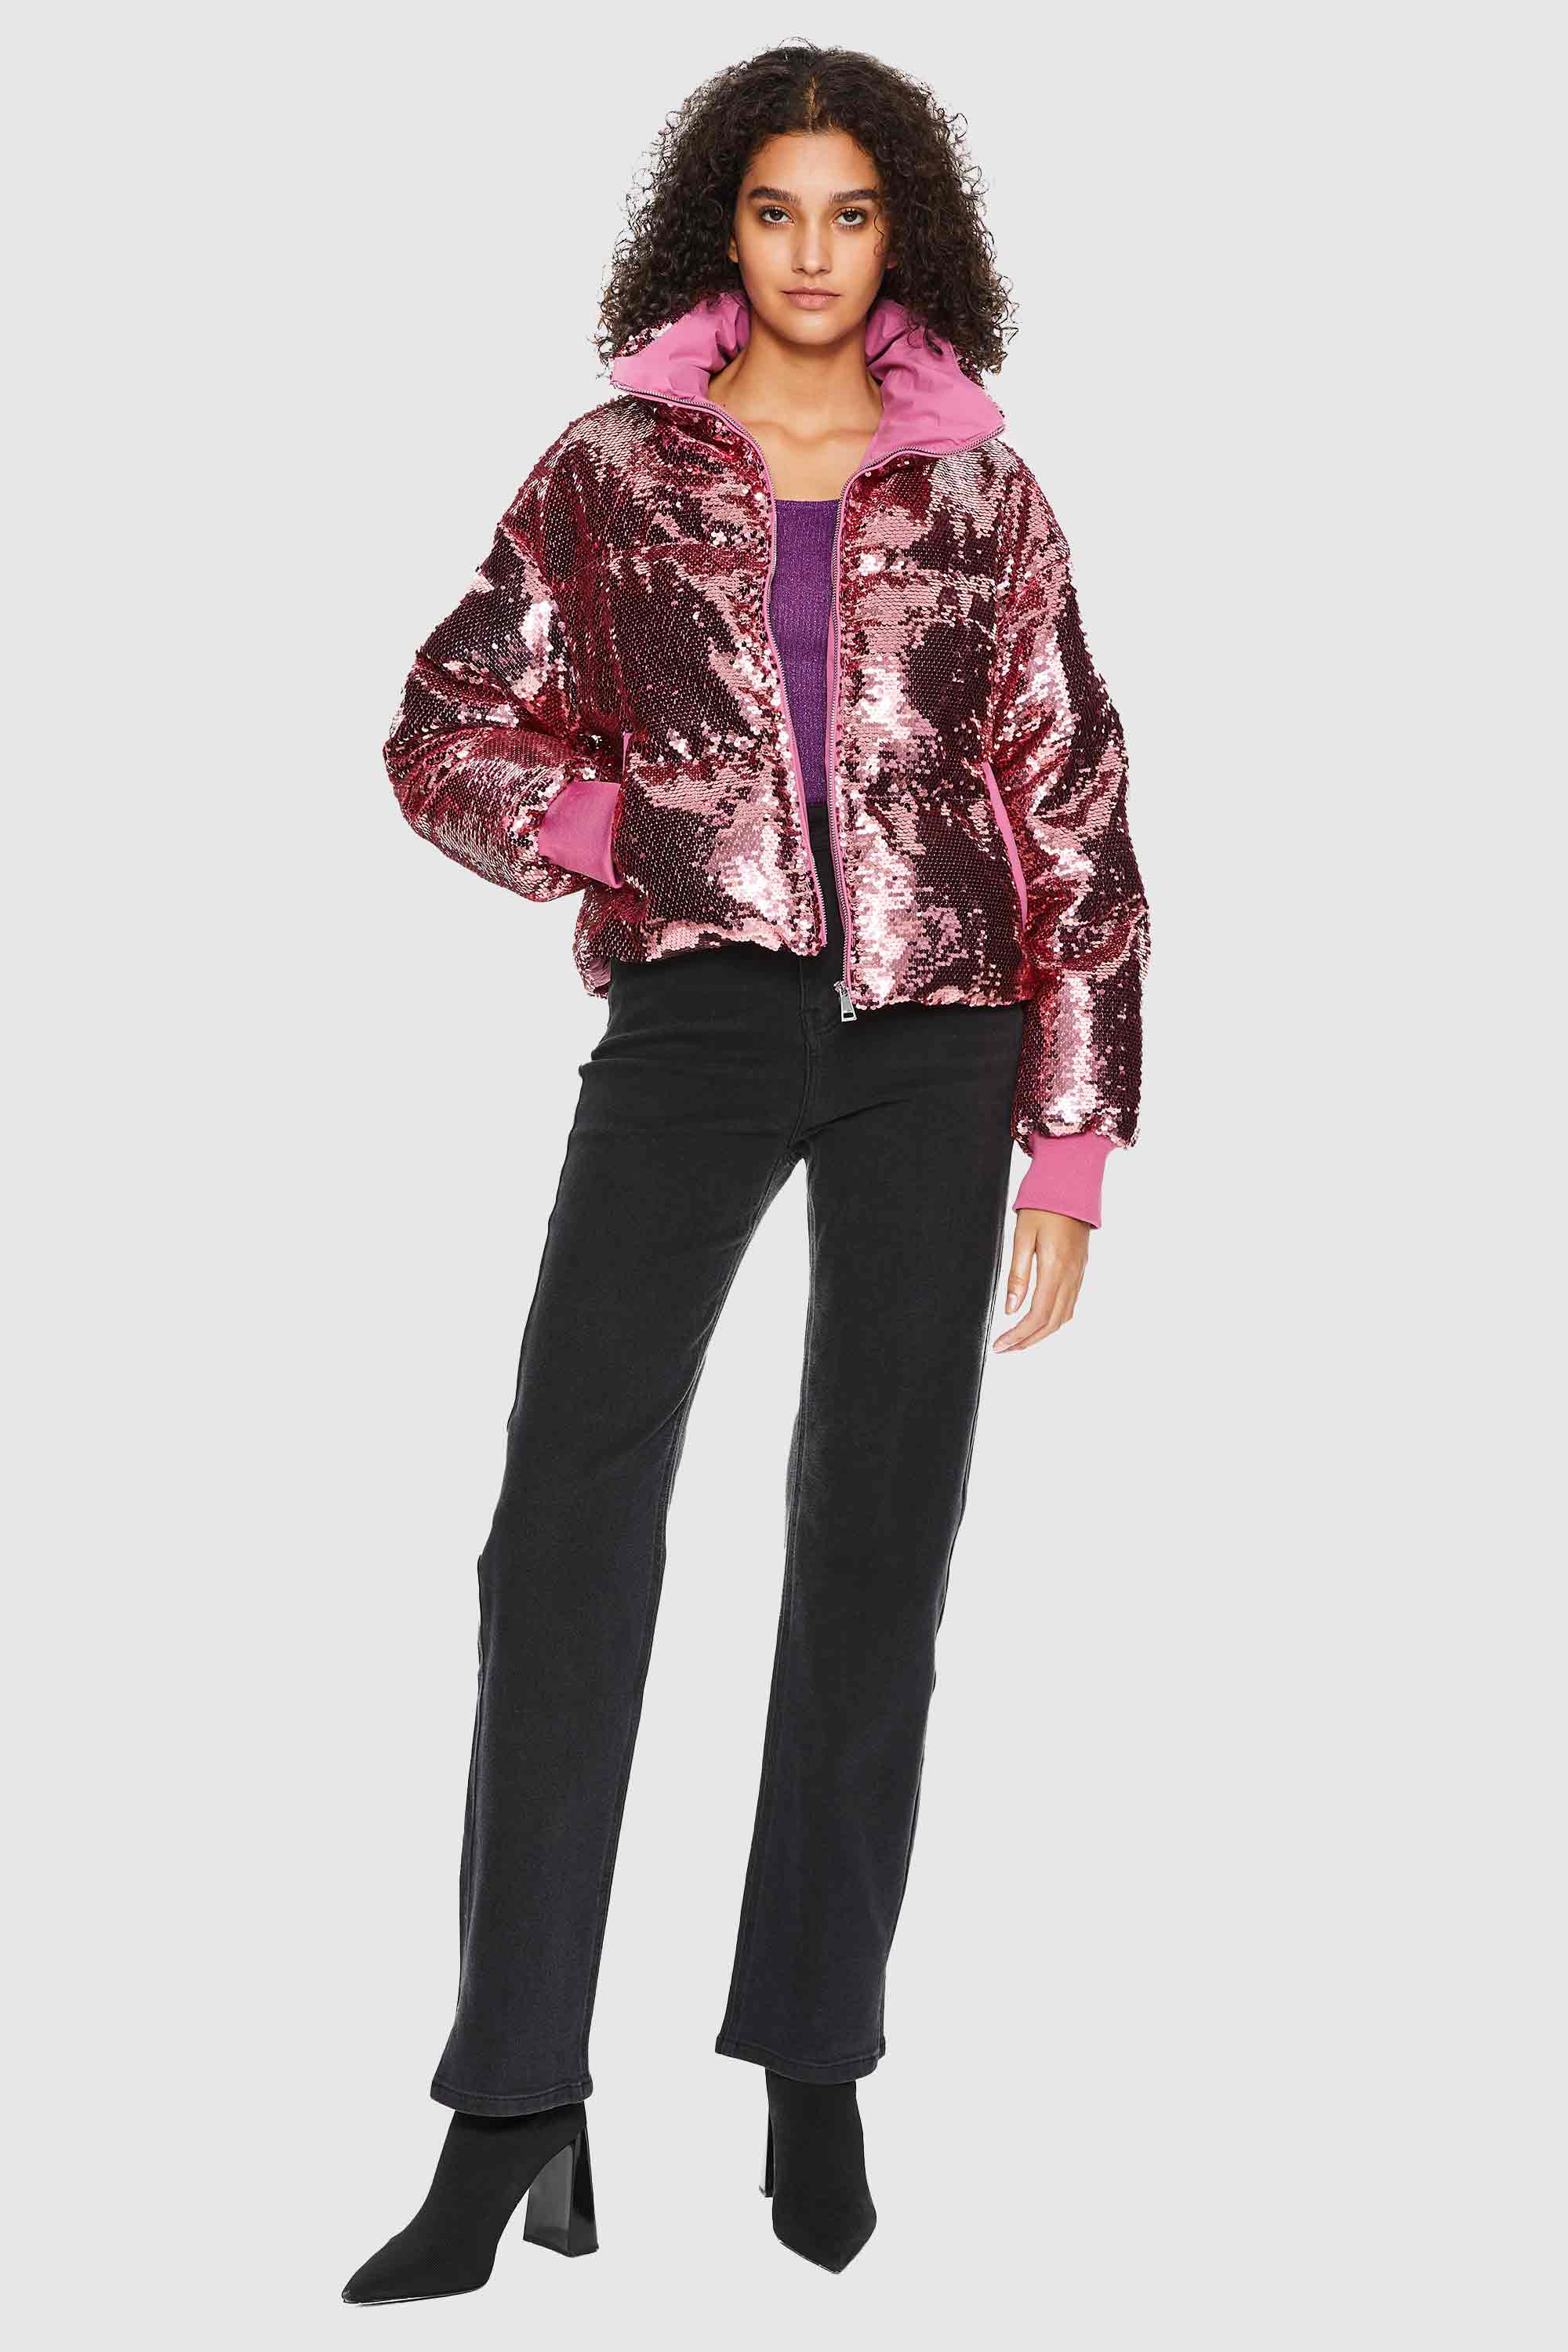 LBECLEY Plus Size Light Jackets Women Sequins Sequin Jacket Casual Long  Sleeve Glitter Party Shiny Lapel Coat Rave Outerwear Rigid Heated Coat Hot  Pink M - Walmart.com